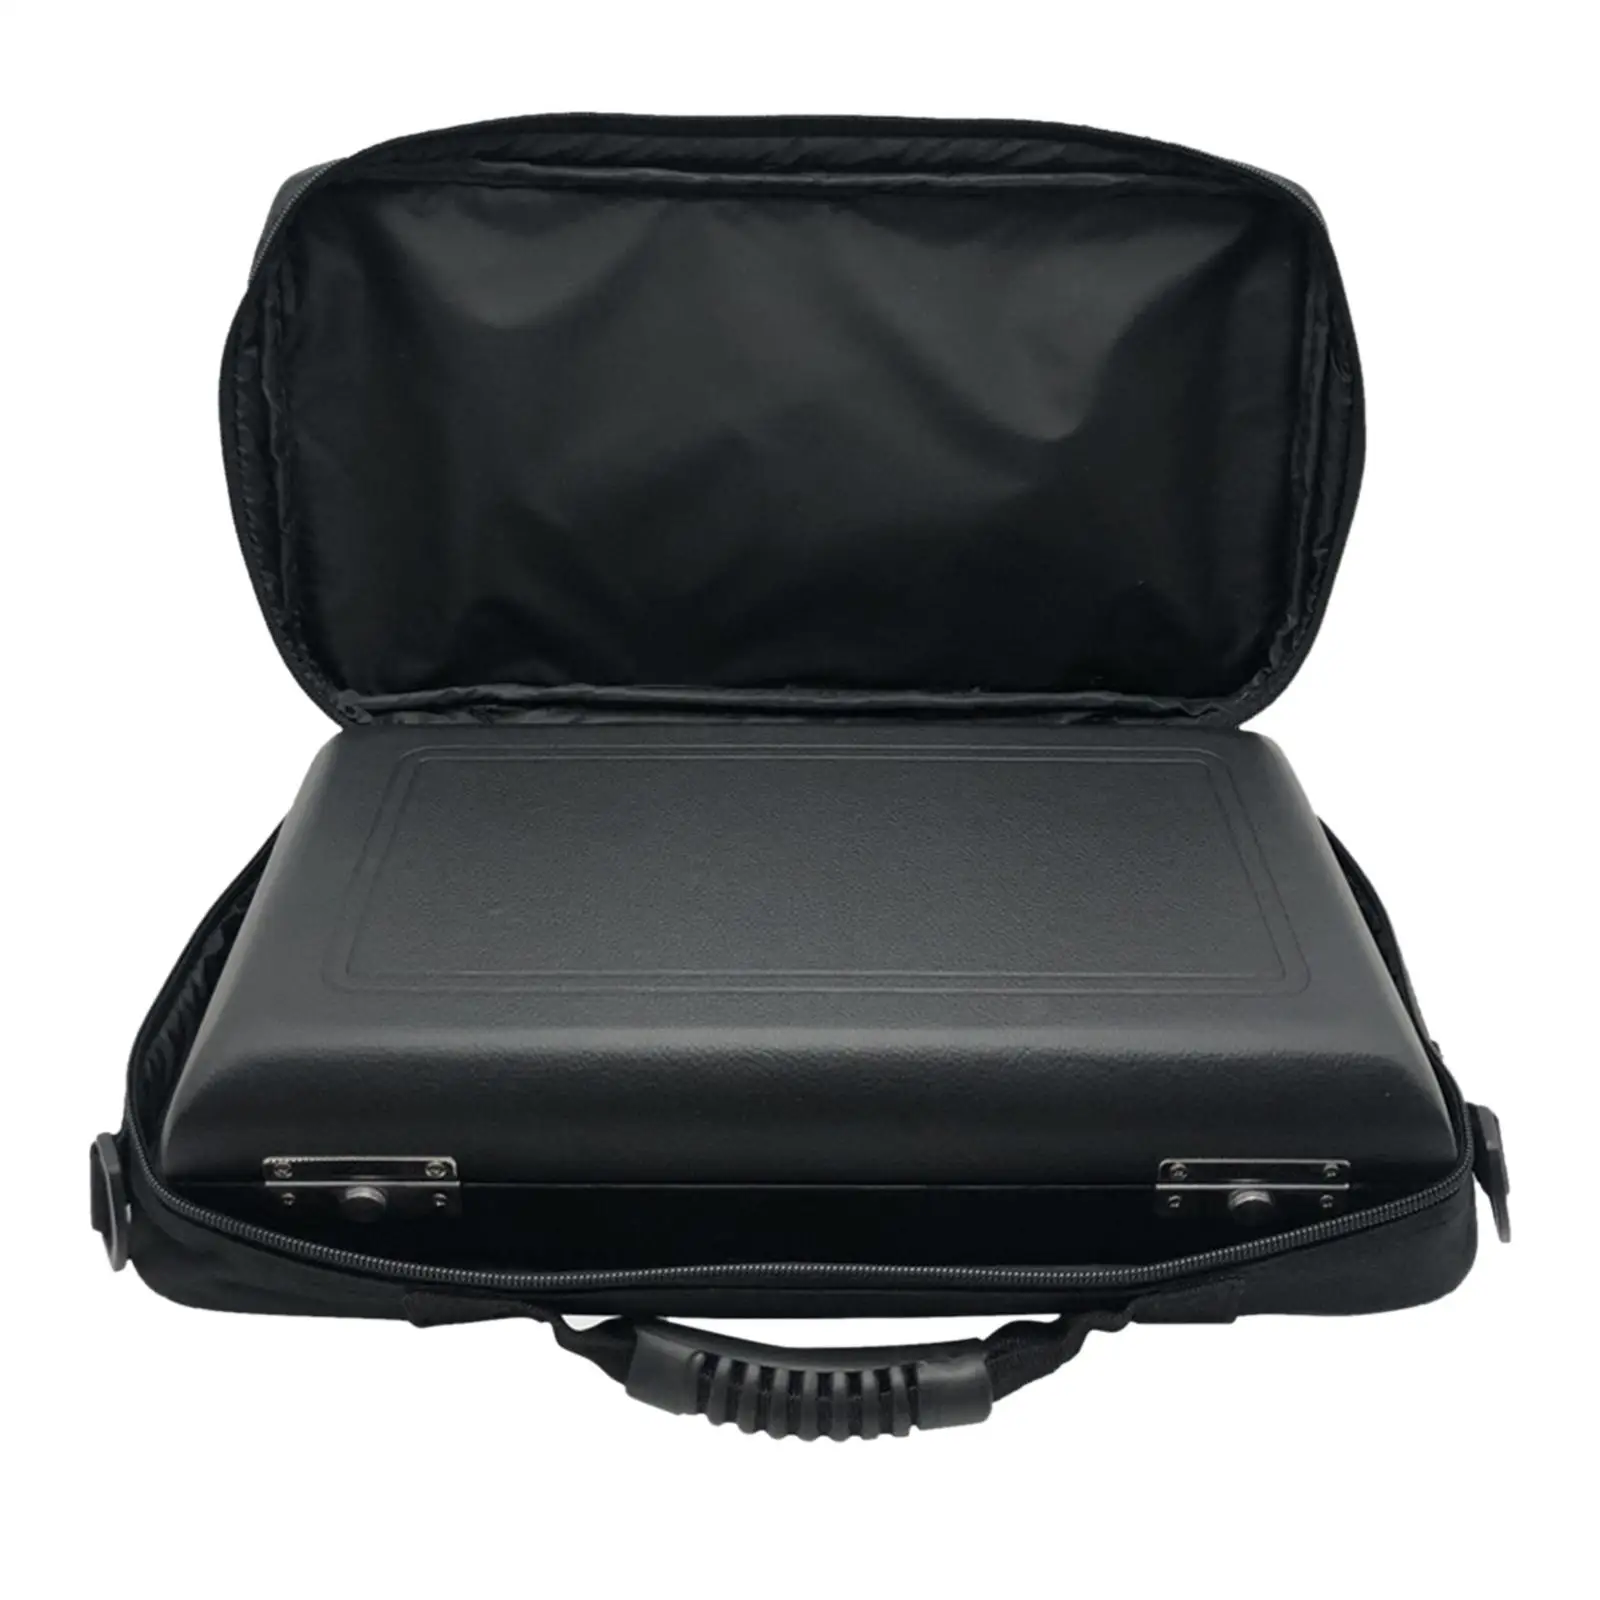 Wind Instrument Oboe Carry Gig Bag Water Resistant Thickned Adjustable Strap Portable for Gifts Professional Home Shoulder Bag